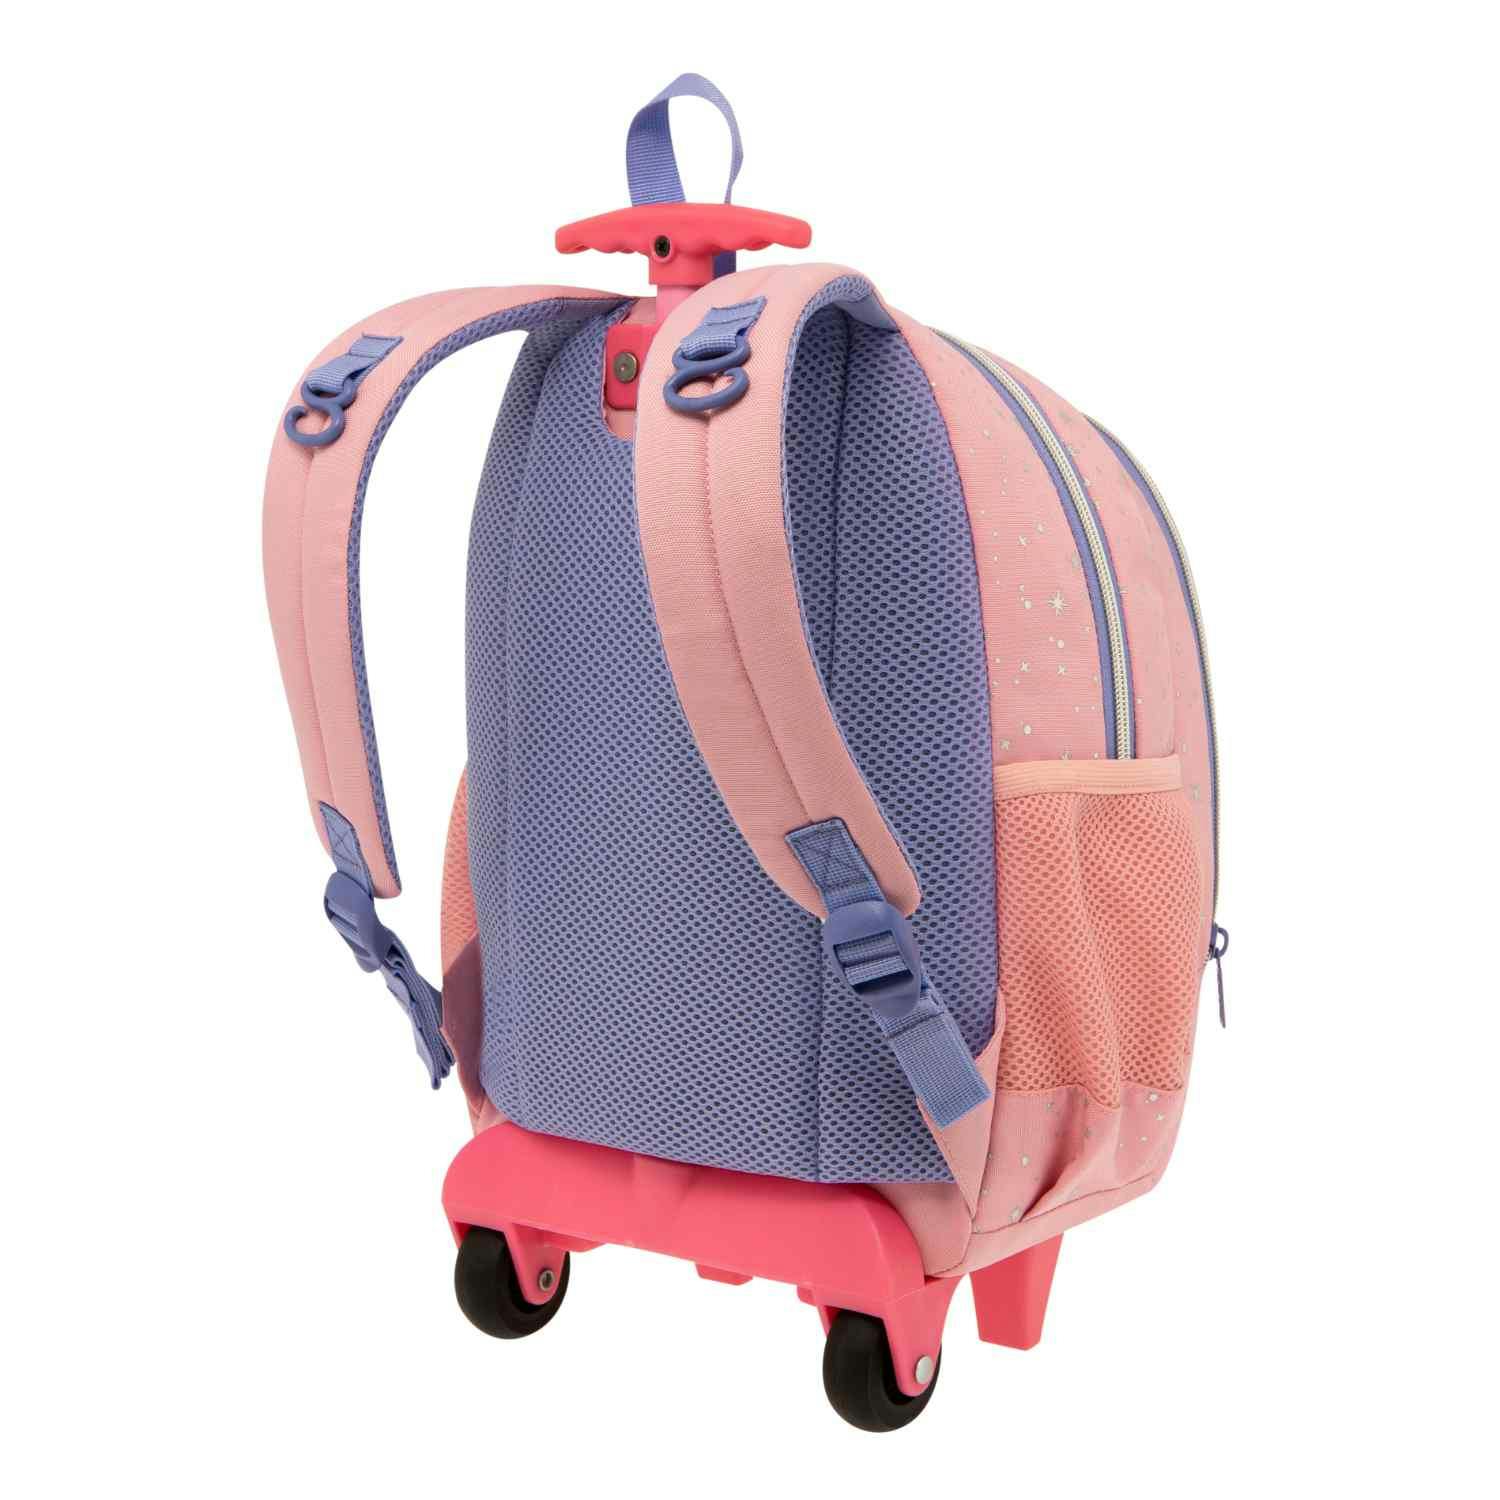 POLO - Polo TROLLEY JUNIOR LITTLE Trolley Bag Σχολική Τσάντα Τρόλευ Νηπίου Χρώμα Ροζ Μ25 x Π16 x Υ34cm 9-01-039-8227